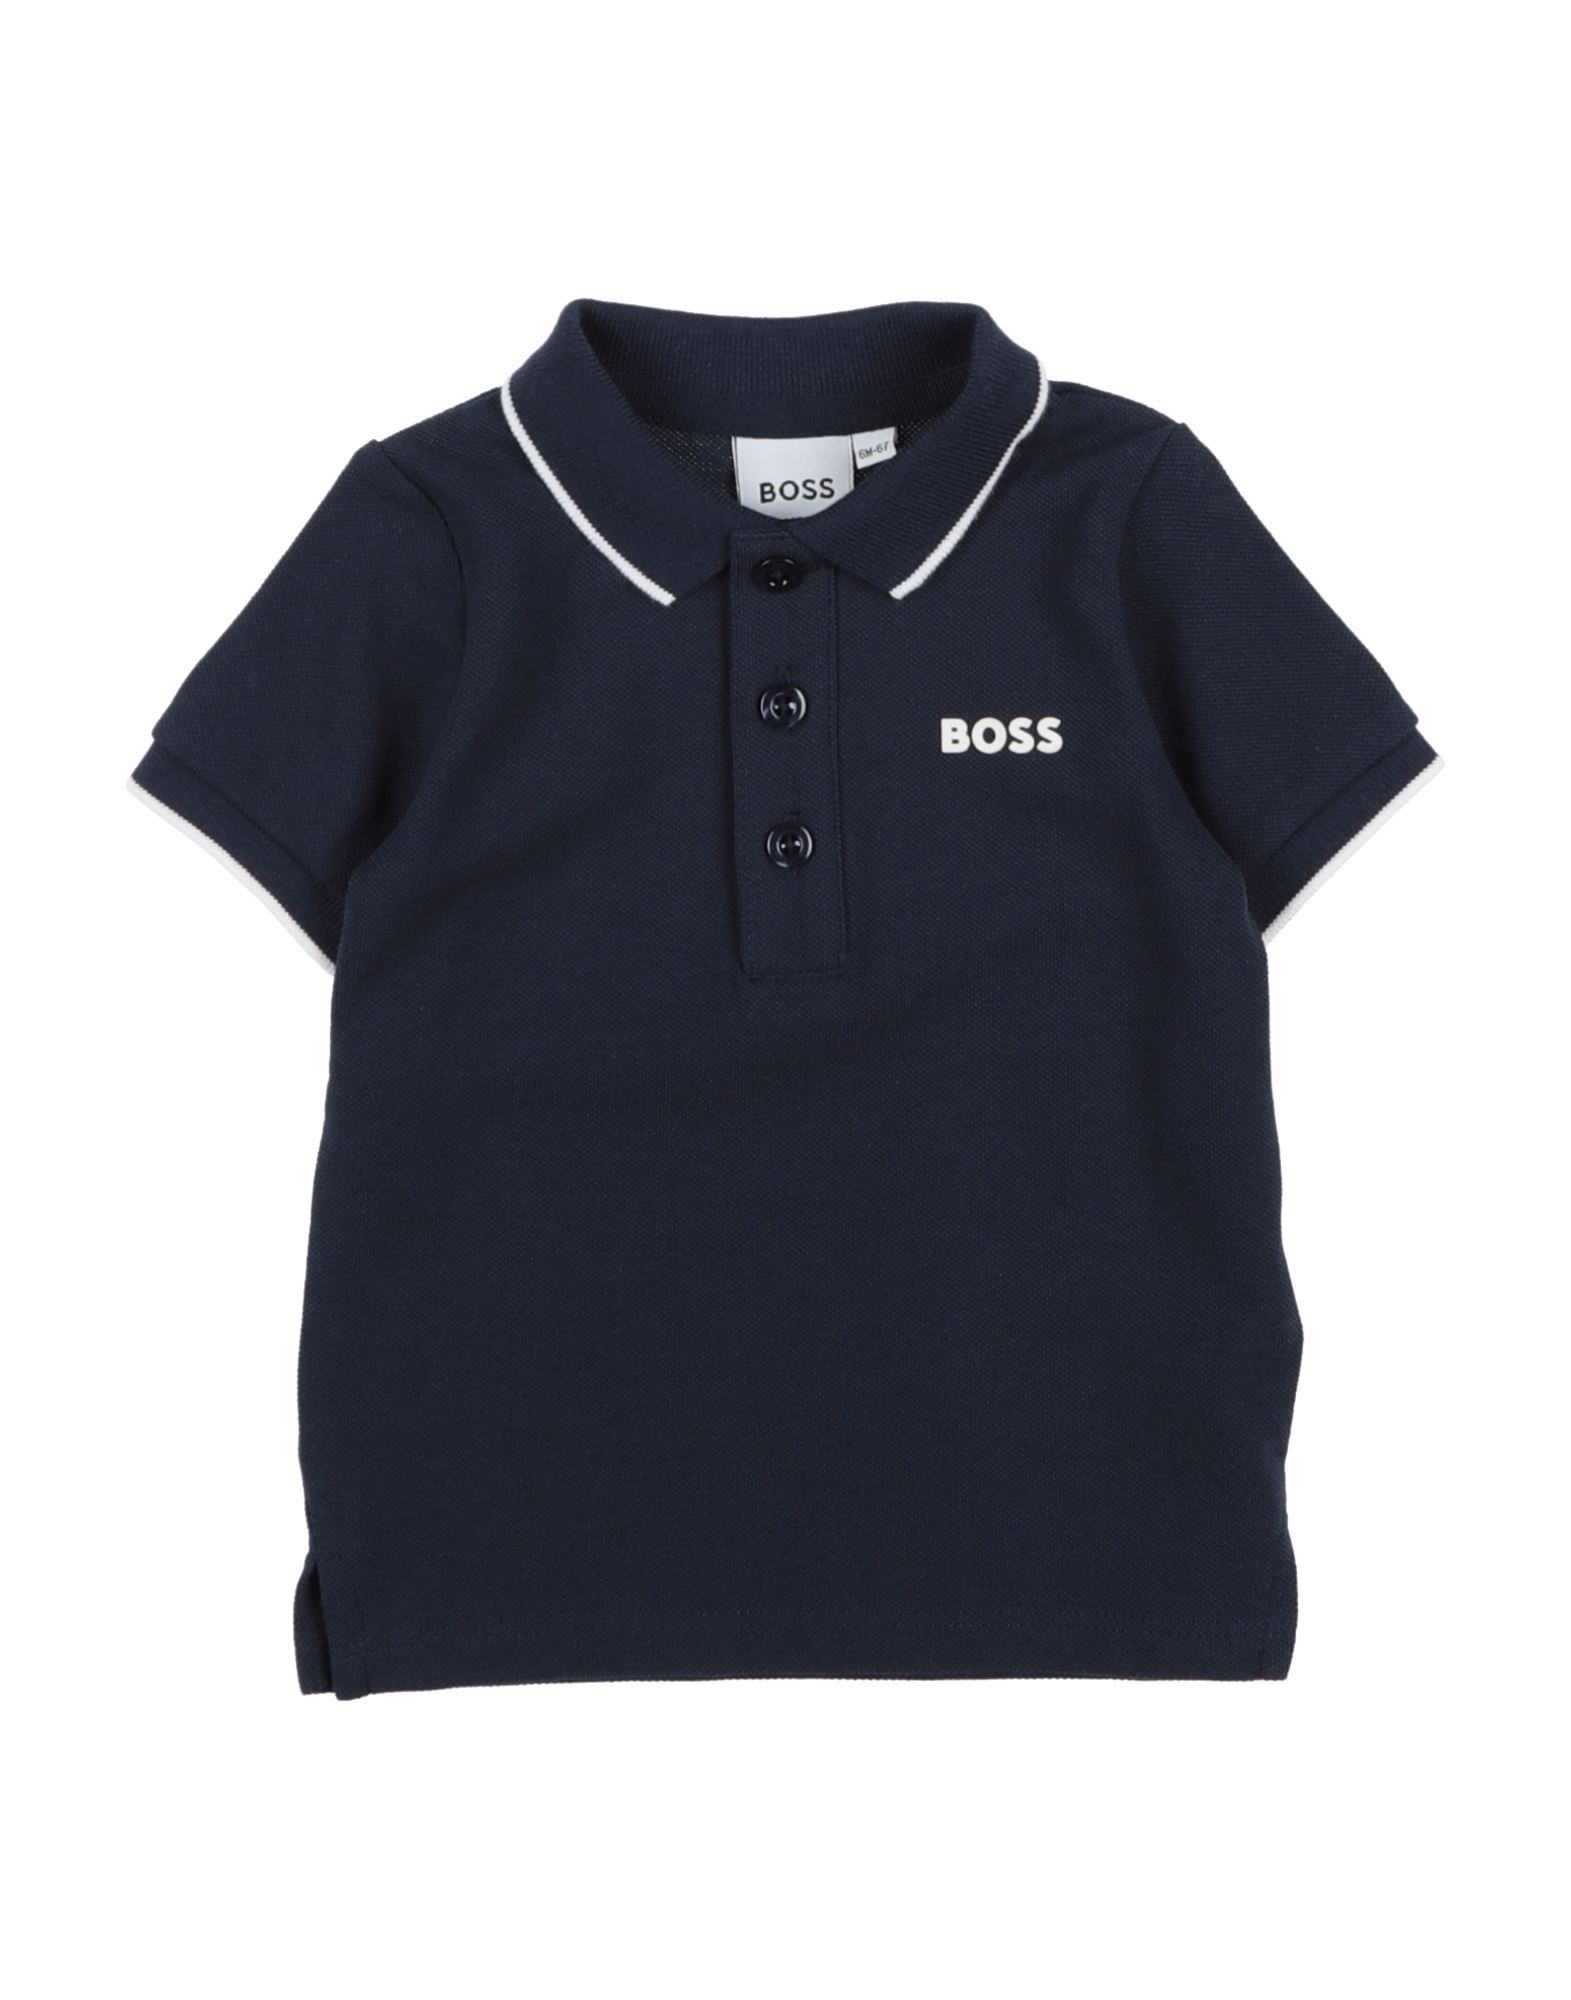 BOSS Poloshirt Kinder Marineblau von BOSS